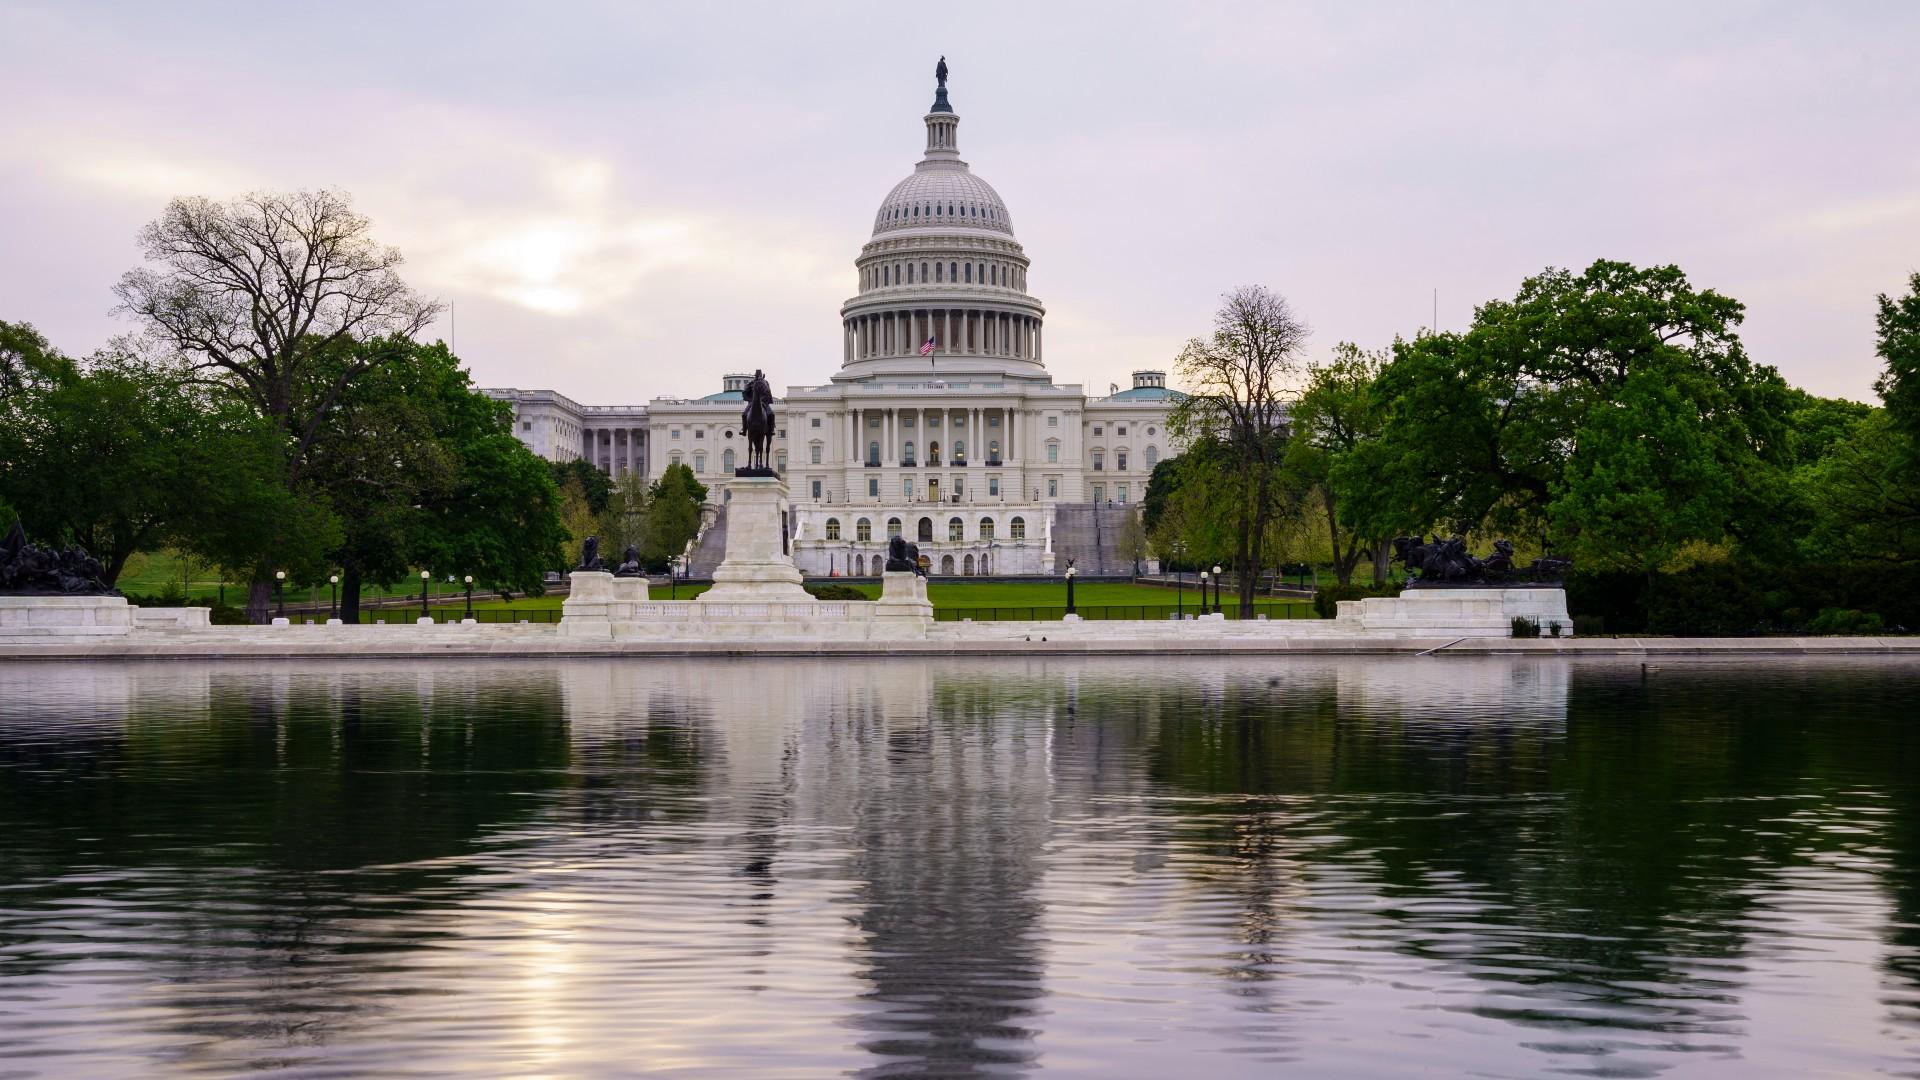 This April 28, 2021, file photo shows the U.S. Capitol building in Washington. (AP Photo / J. Scott Applewhite, File)